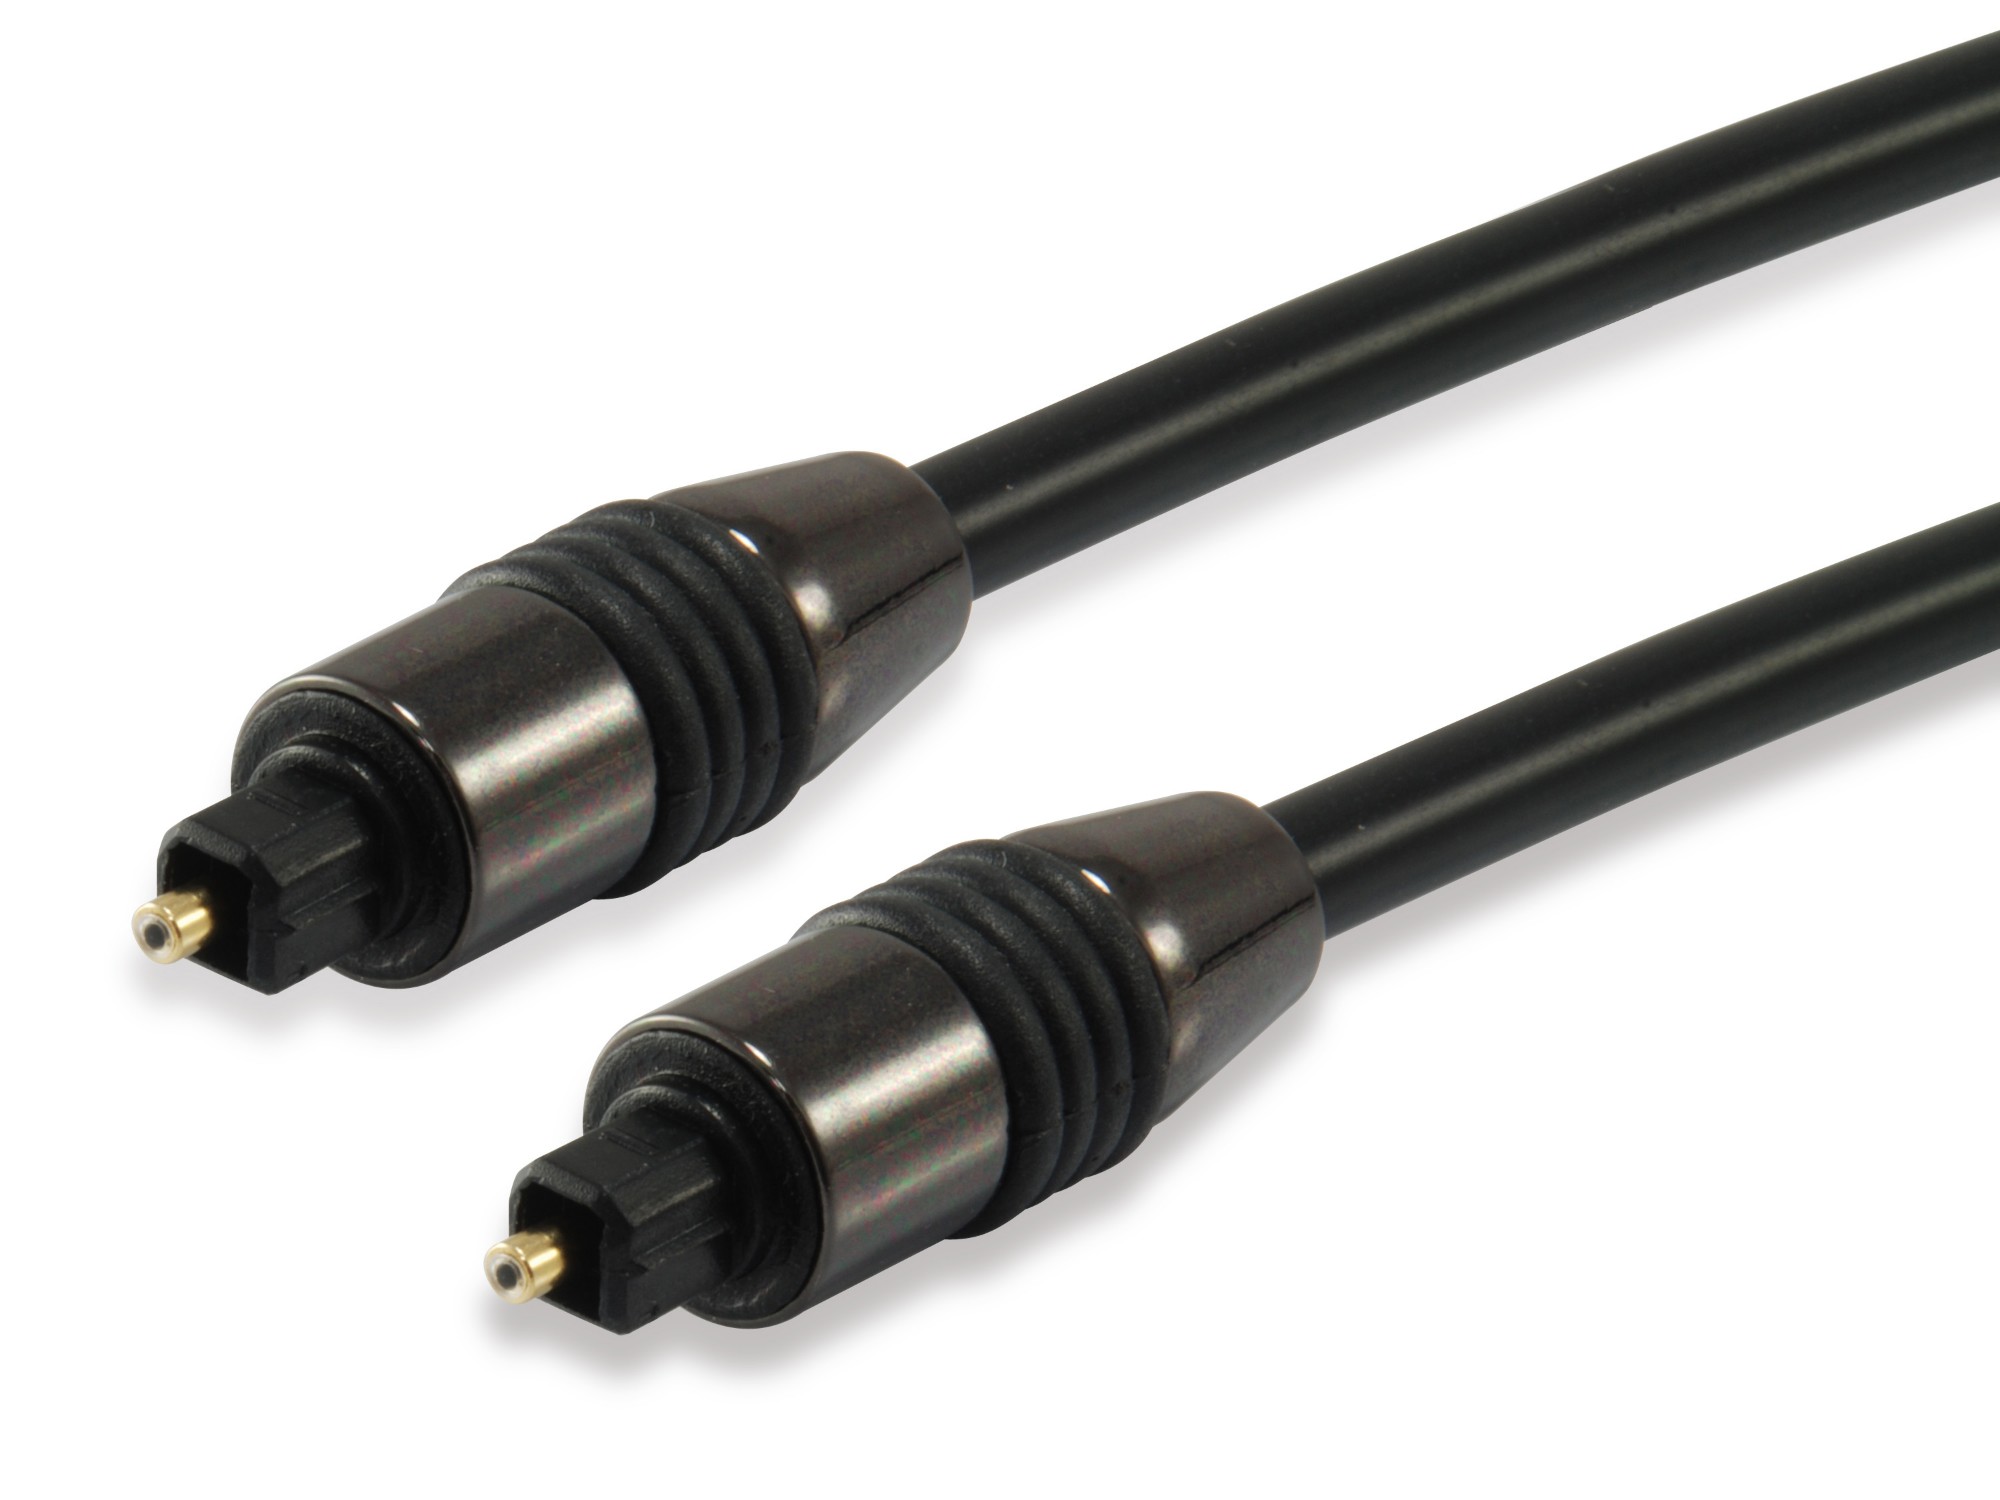 Photos - Cable (video, audio, USB) Equip TOSLINK Optical SPDIF Digital Audio Cable, 1.8m 147921 